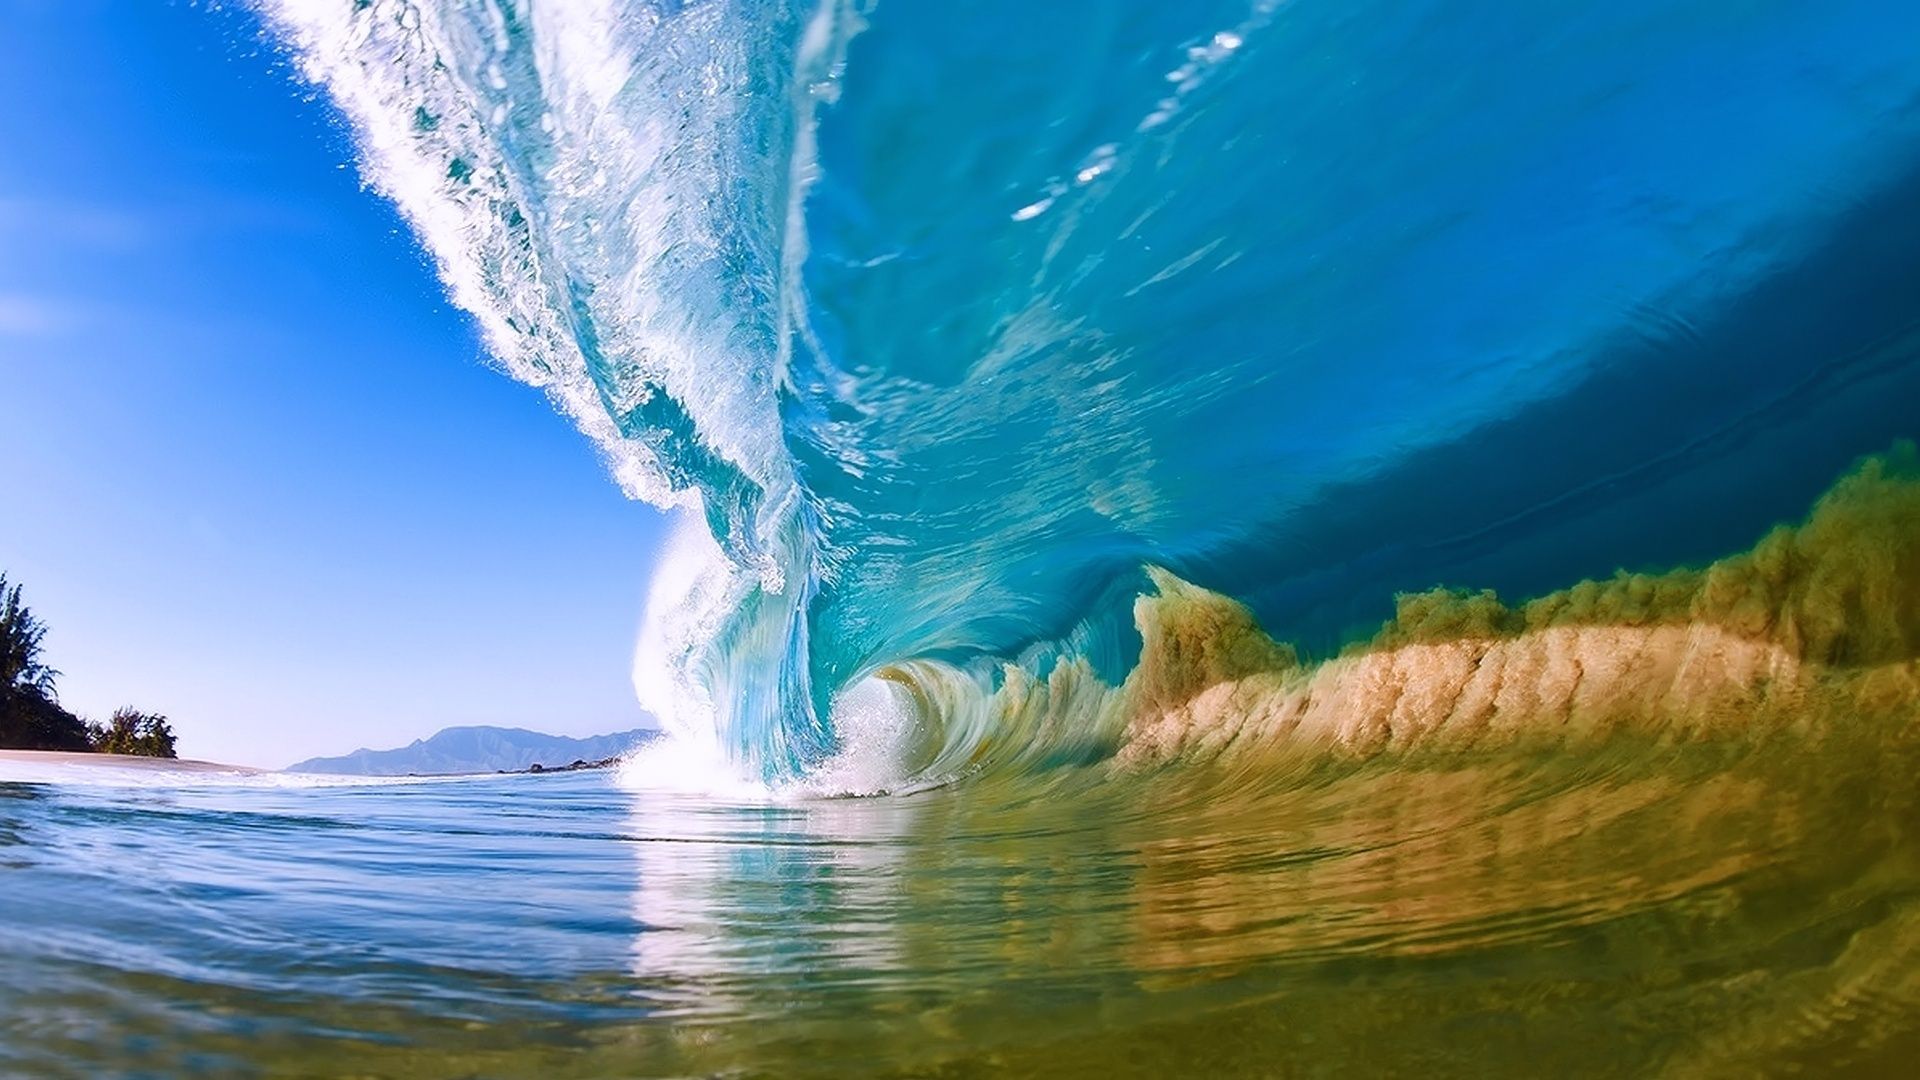 Free download Download Natural Summer Ocean Wave Desktop HD Wallpaper Search more [1920x1080] for your Desktop, Mobile & Tablet. Explore Wave Wallpaper for Desktop. Beach Waves Wallpaper for Desktop